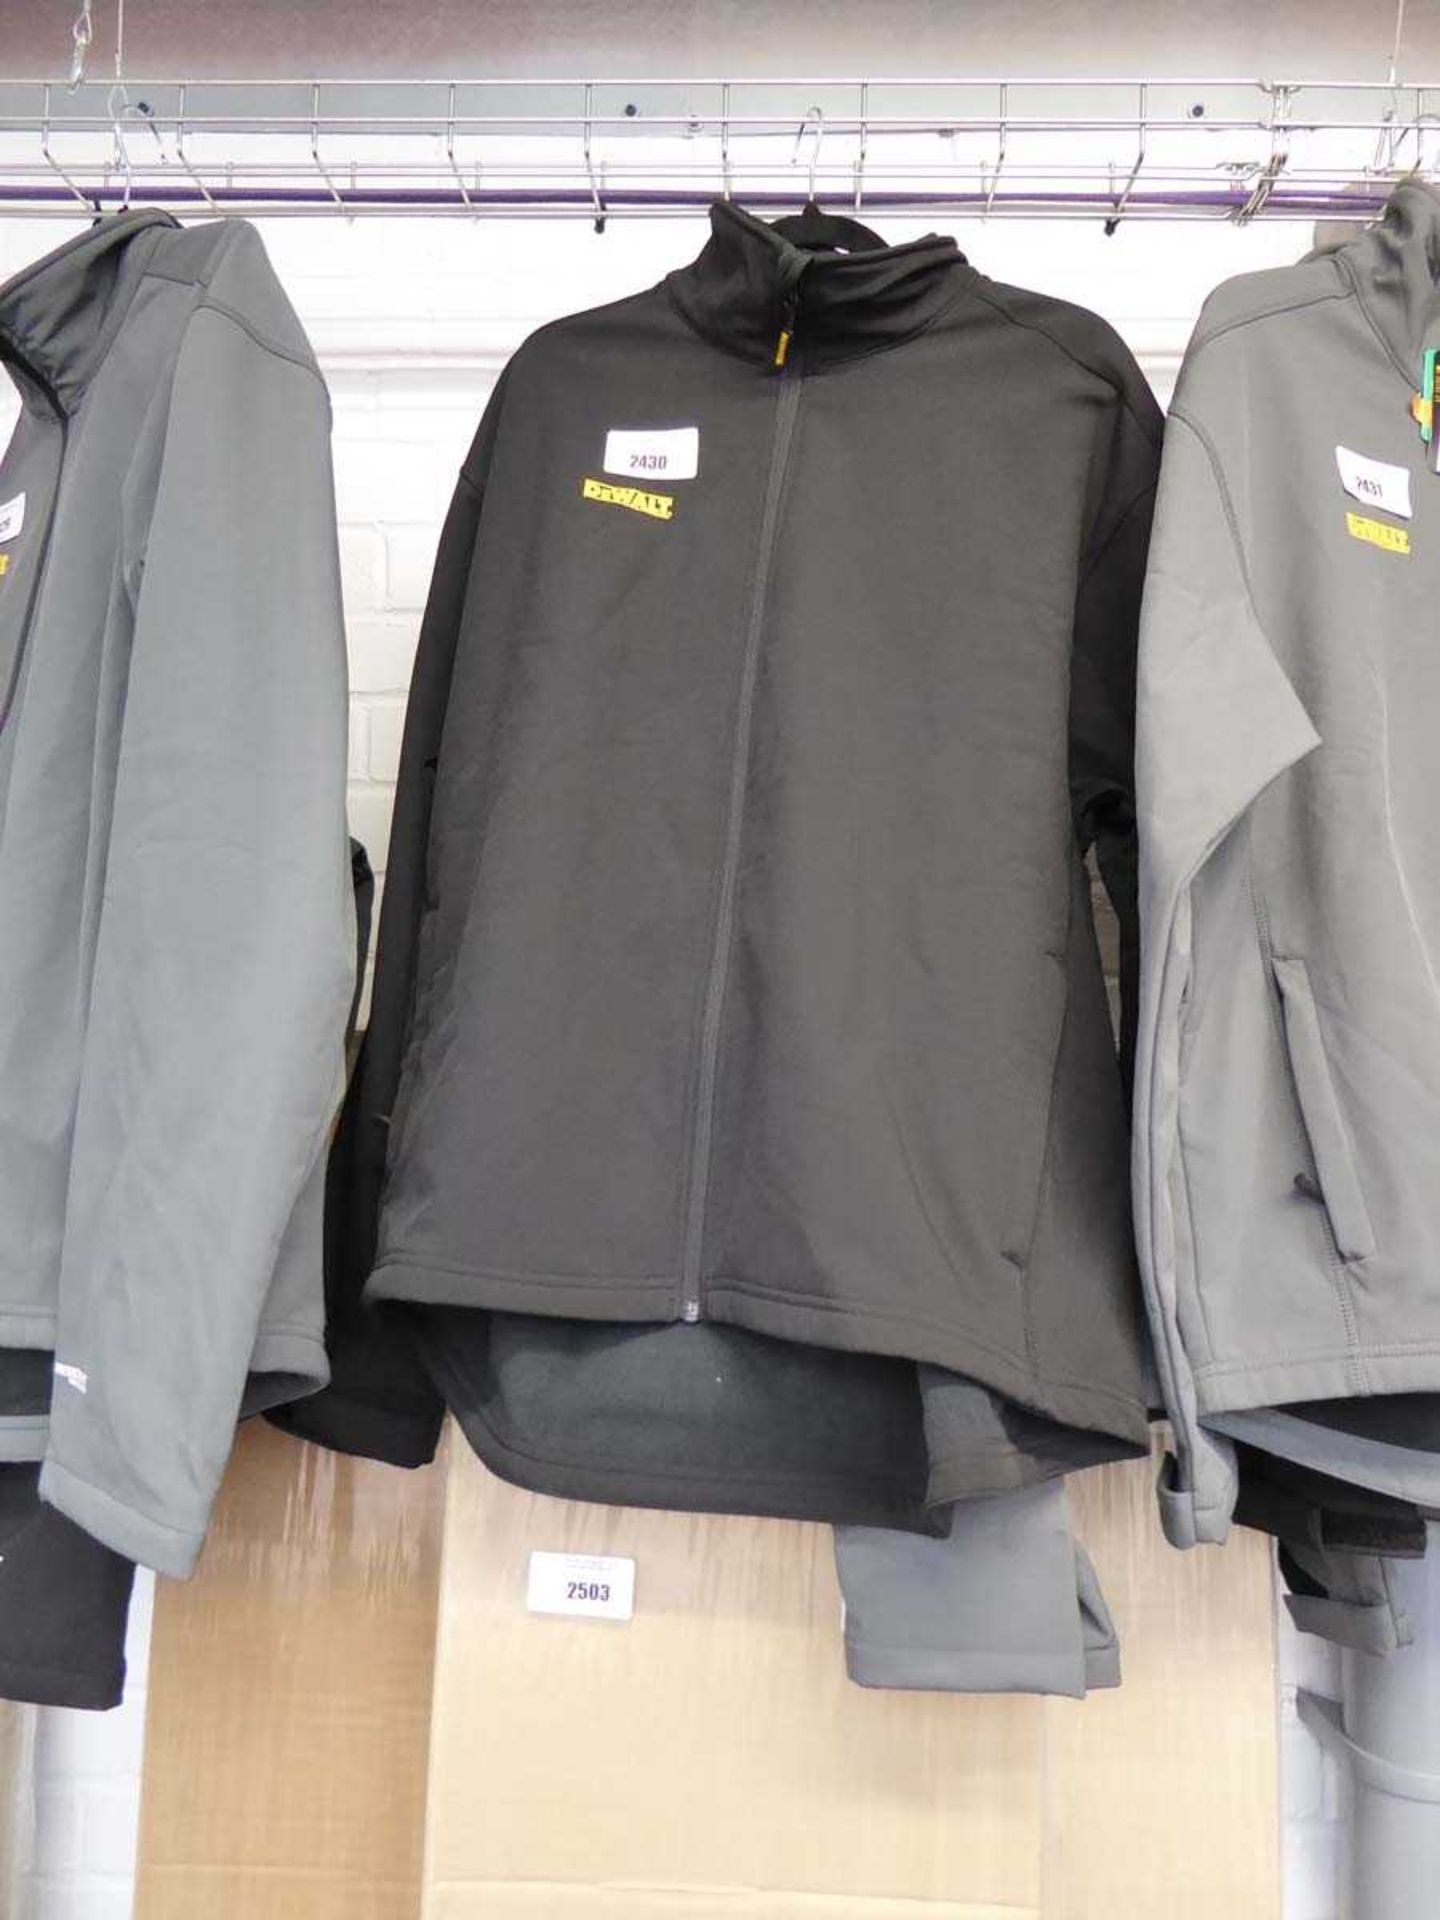 +VAT 2 DeWalt full zip waterproof work jackets in black and grey (size XXL)